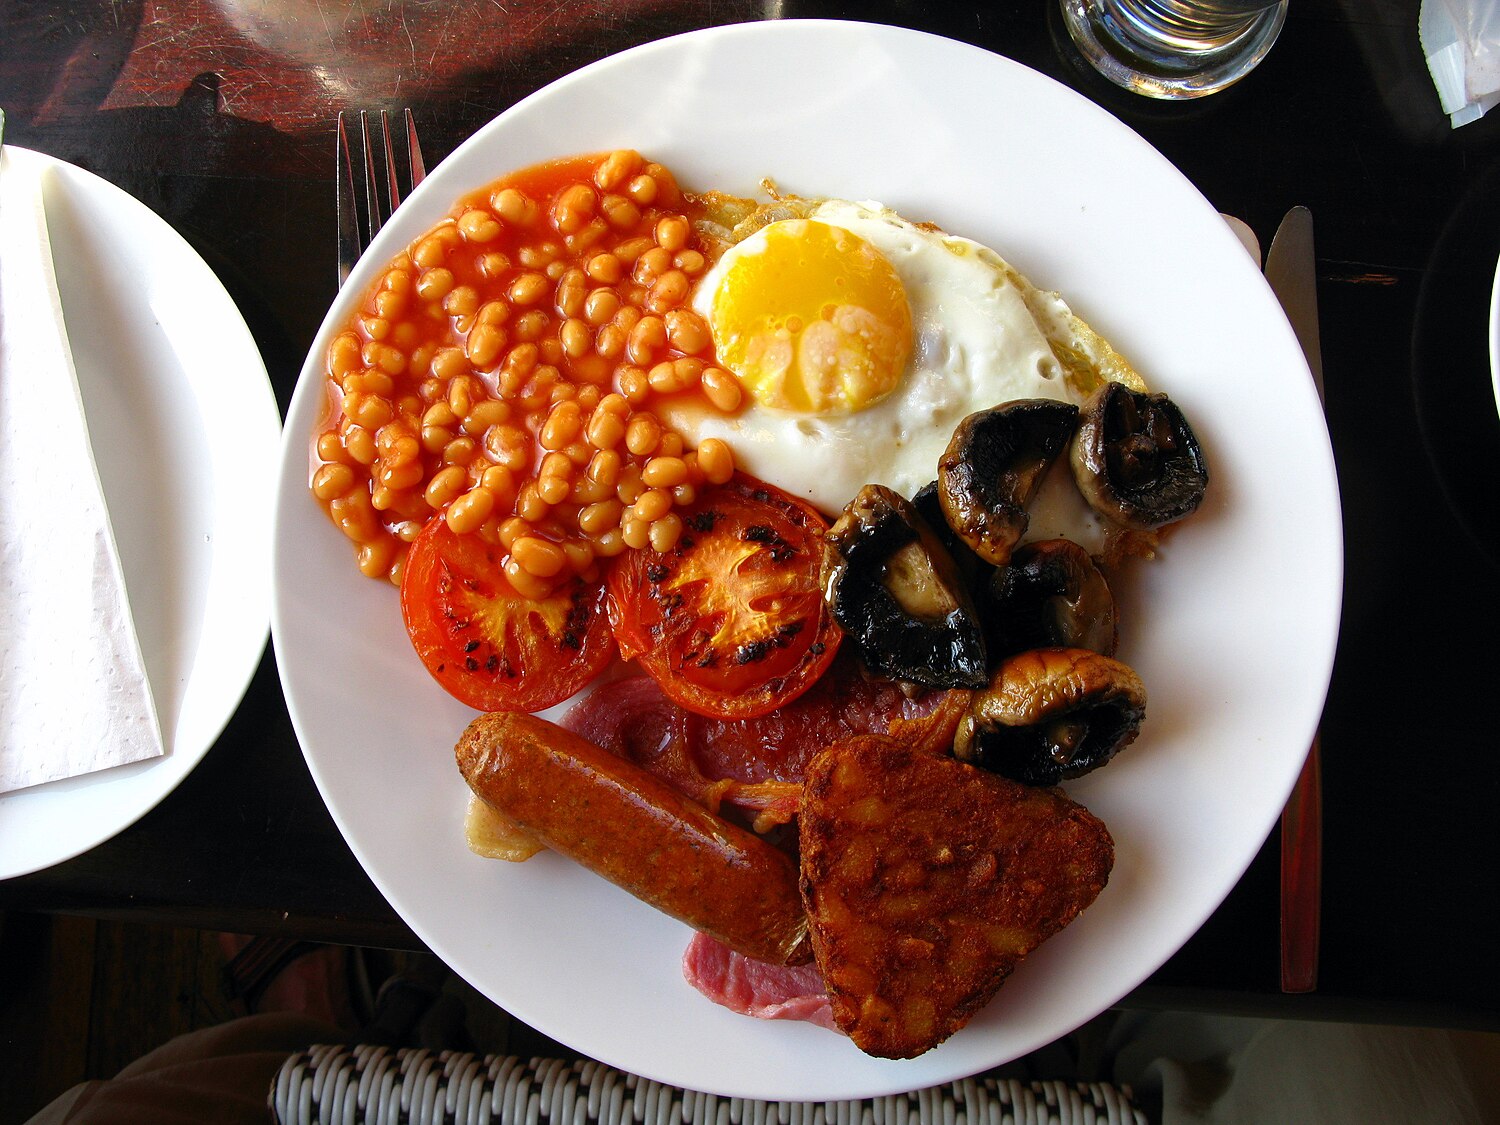 https://upload.wikimedia.org/wikipedia/commons/thumb/2/28/Full_English_breakfast.jpg/1500px-Full_English_breakfast.jpg